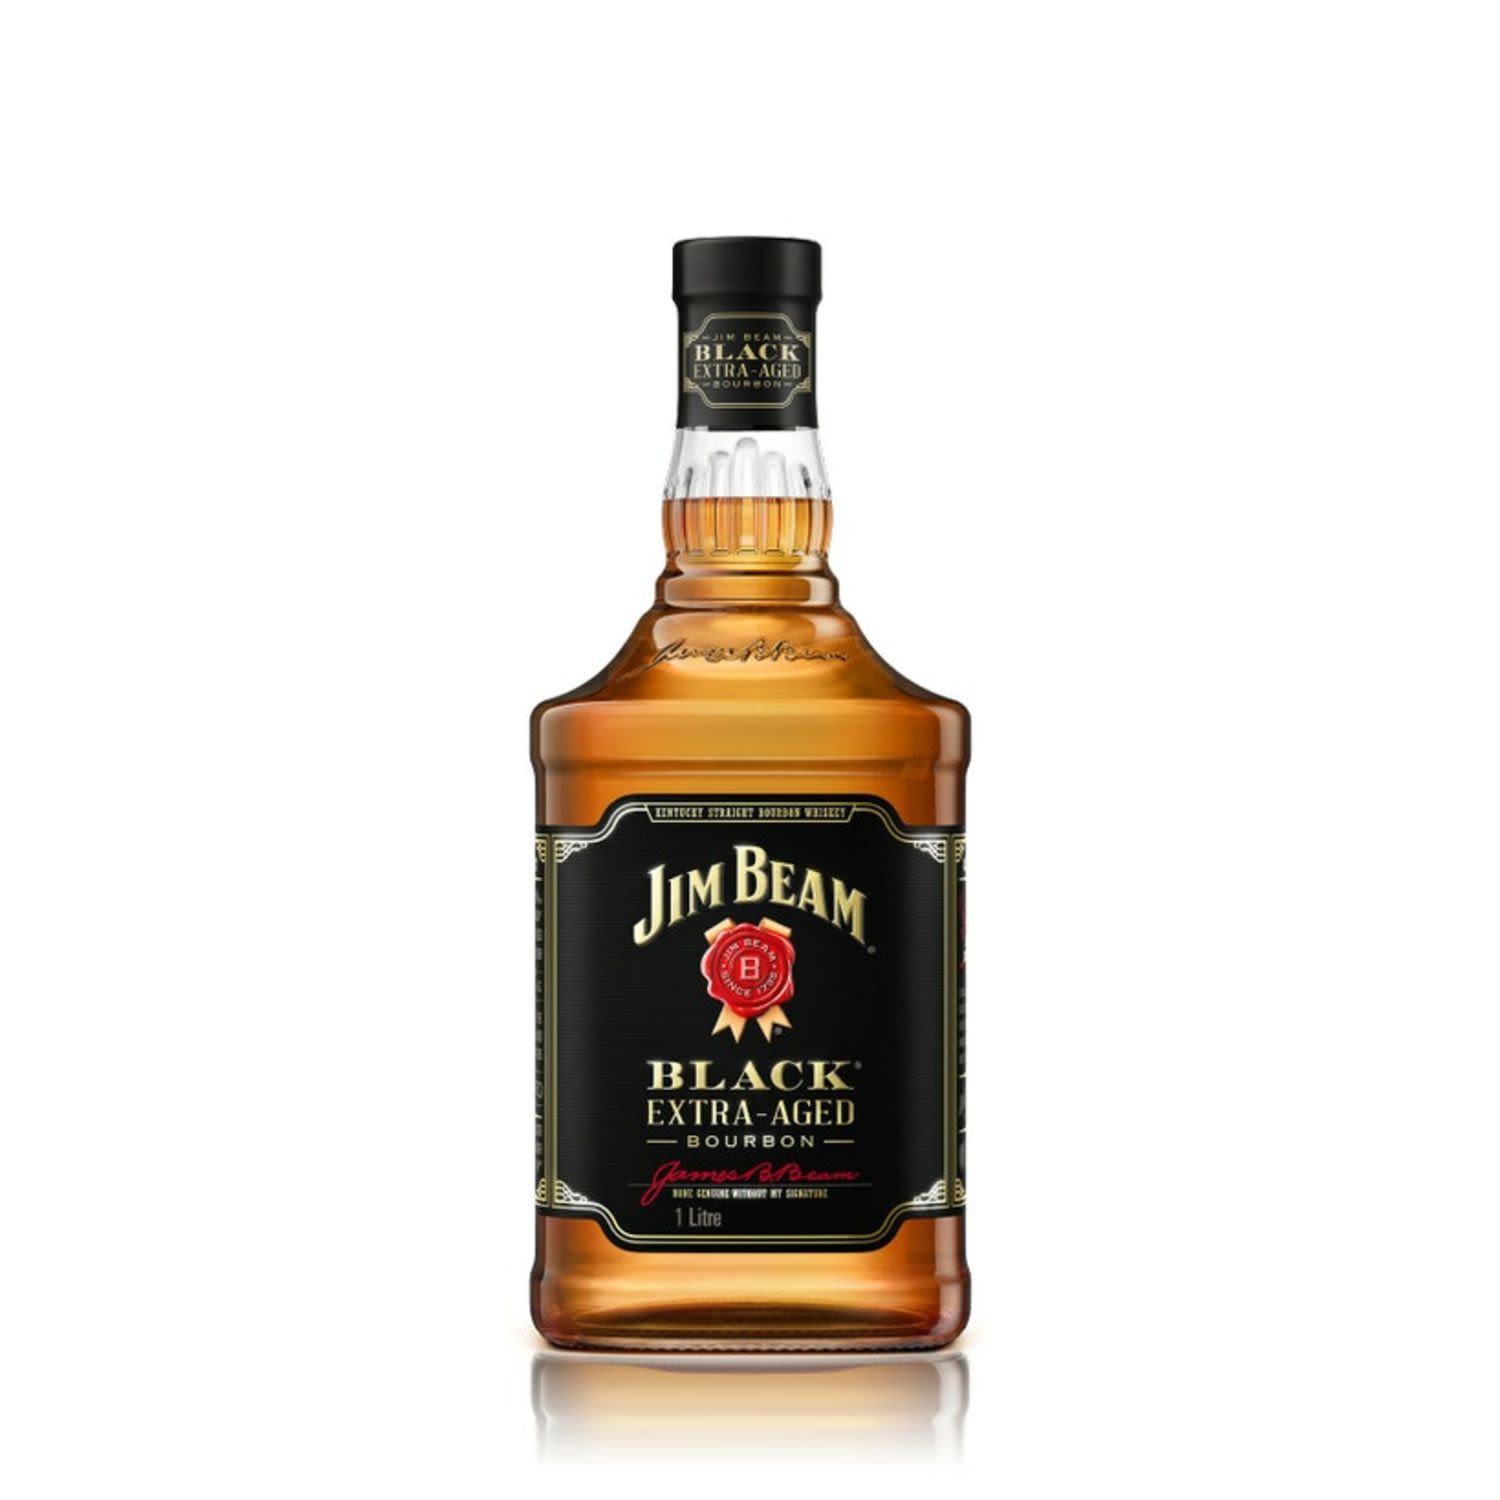 Jim Beam Black Label 1L Bottle